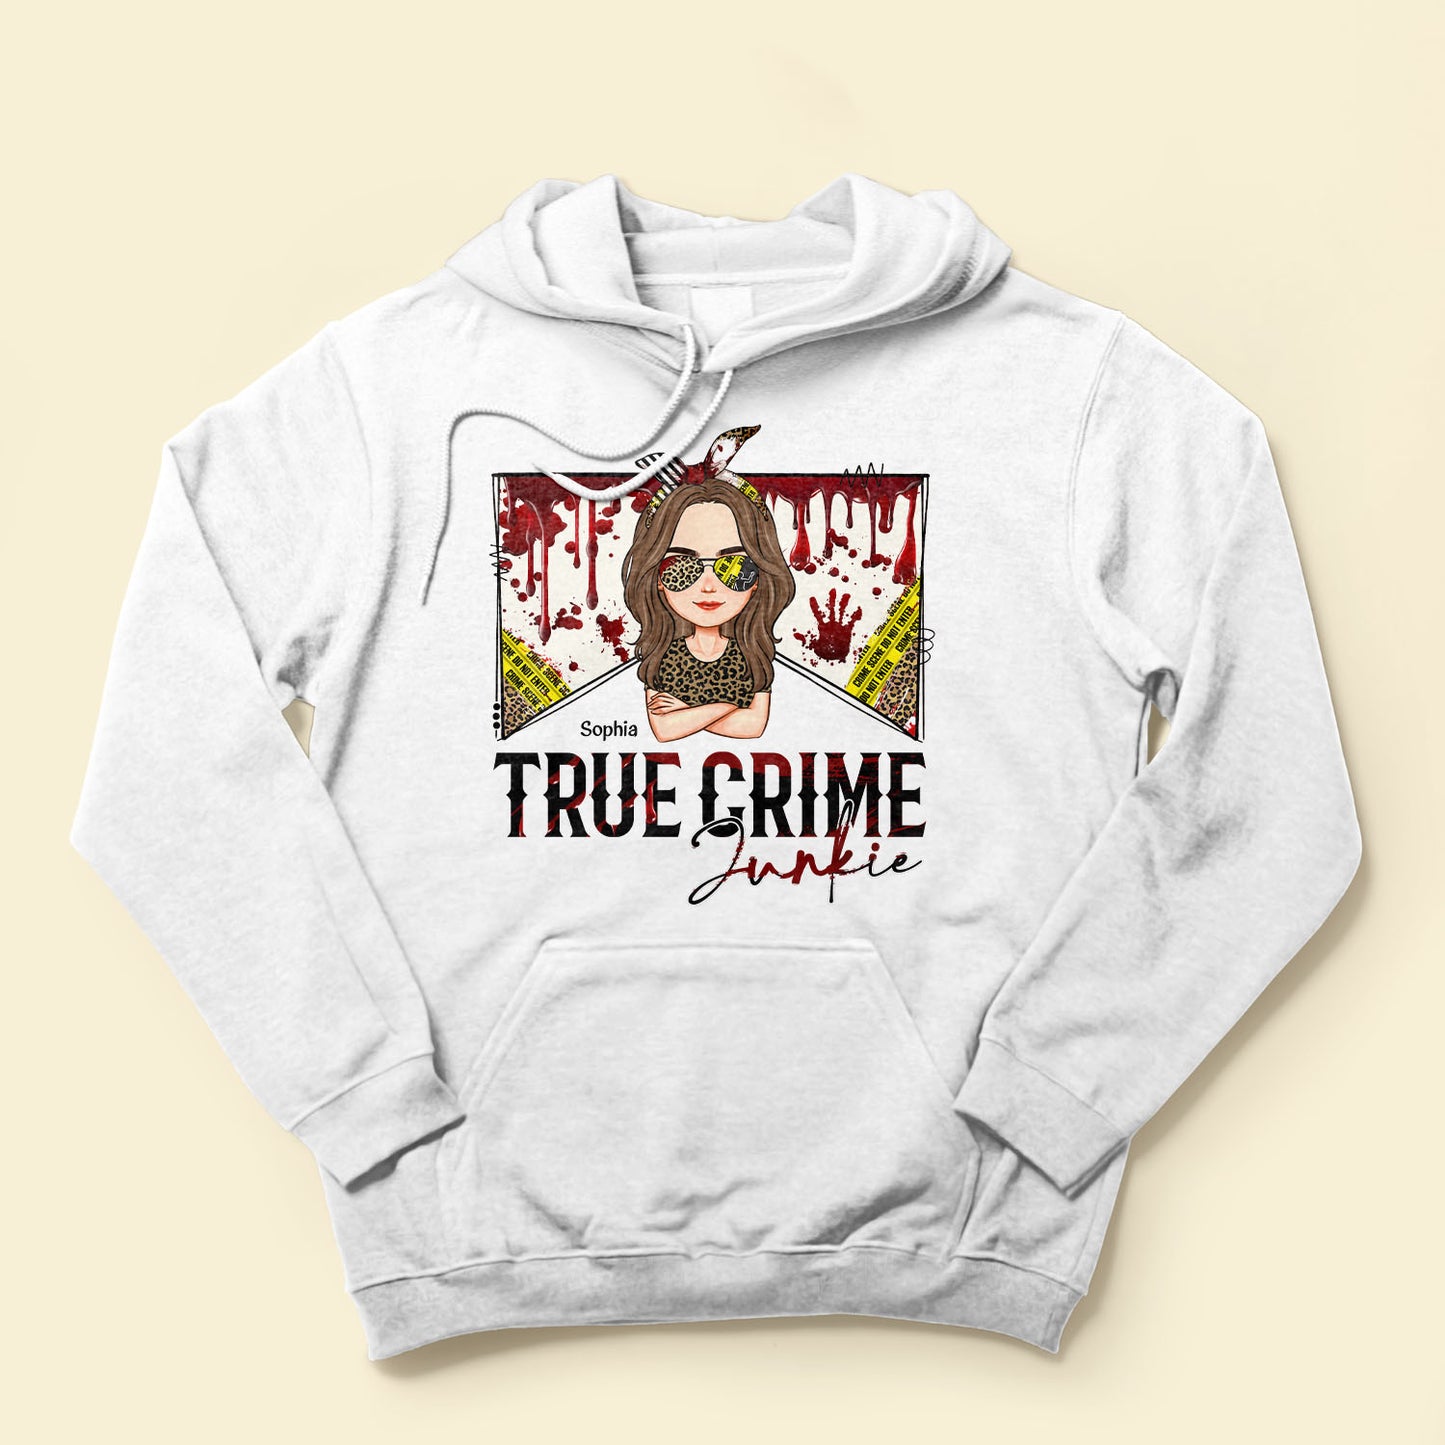 True Crime Junkie - Personalized Shirt